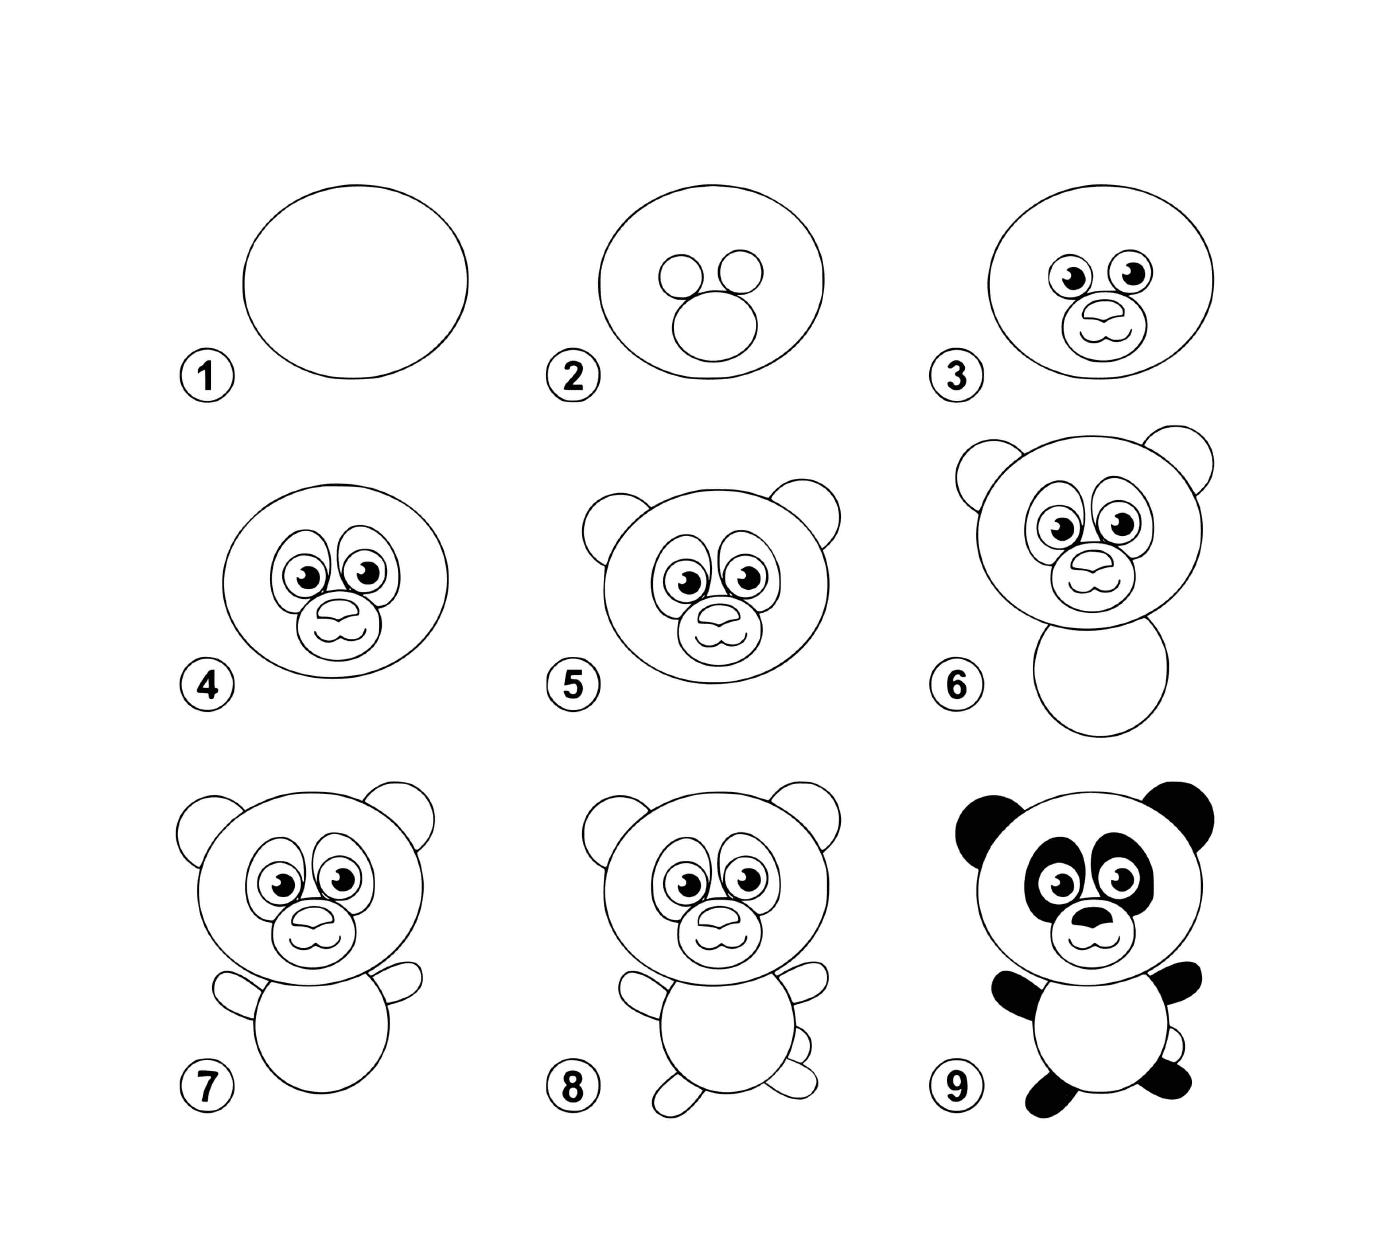  Cómo dibujar un panda paso a paso 